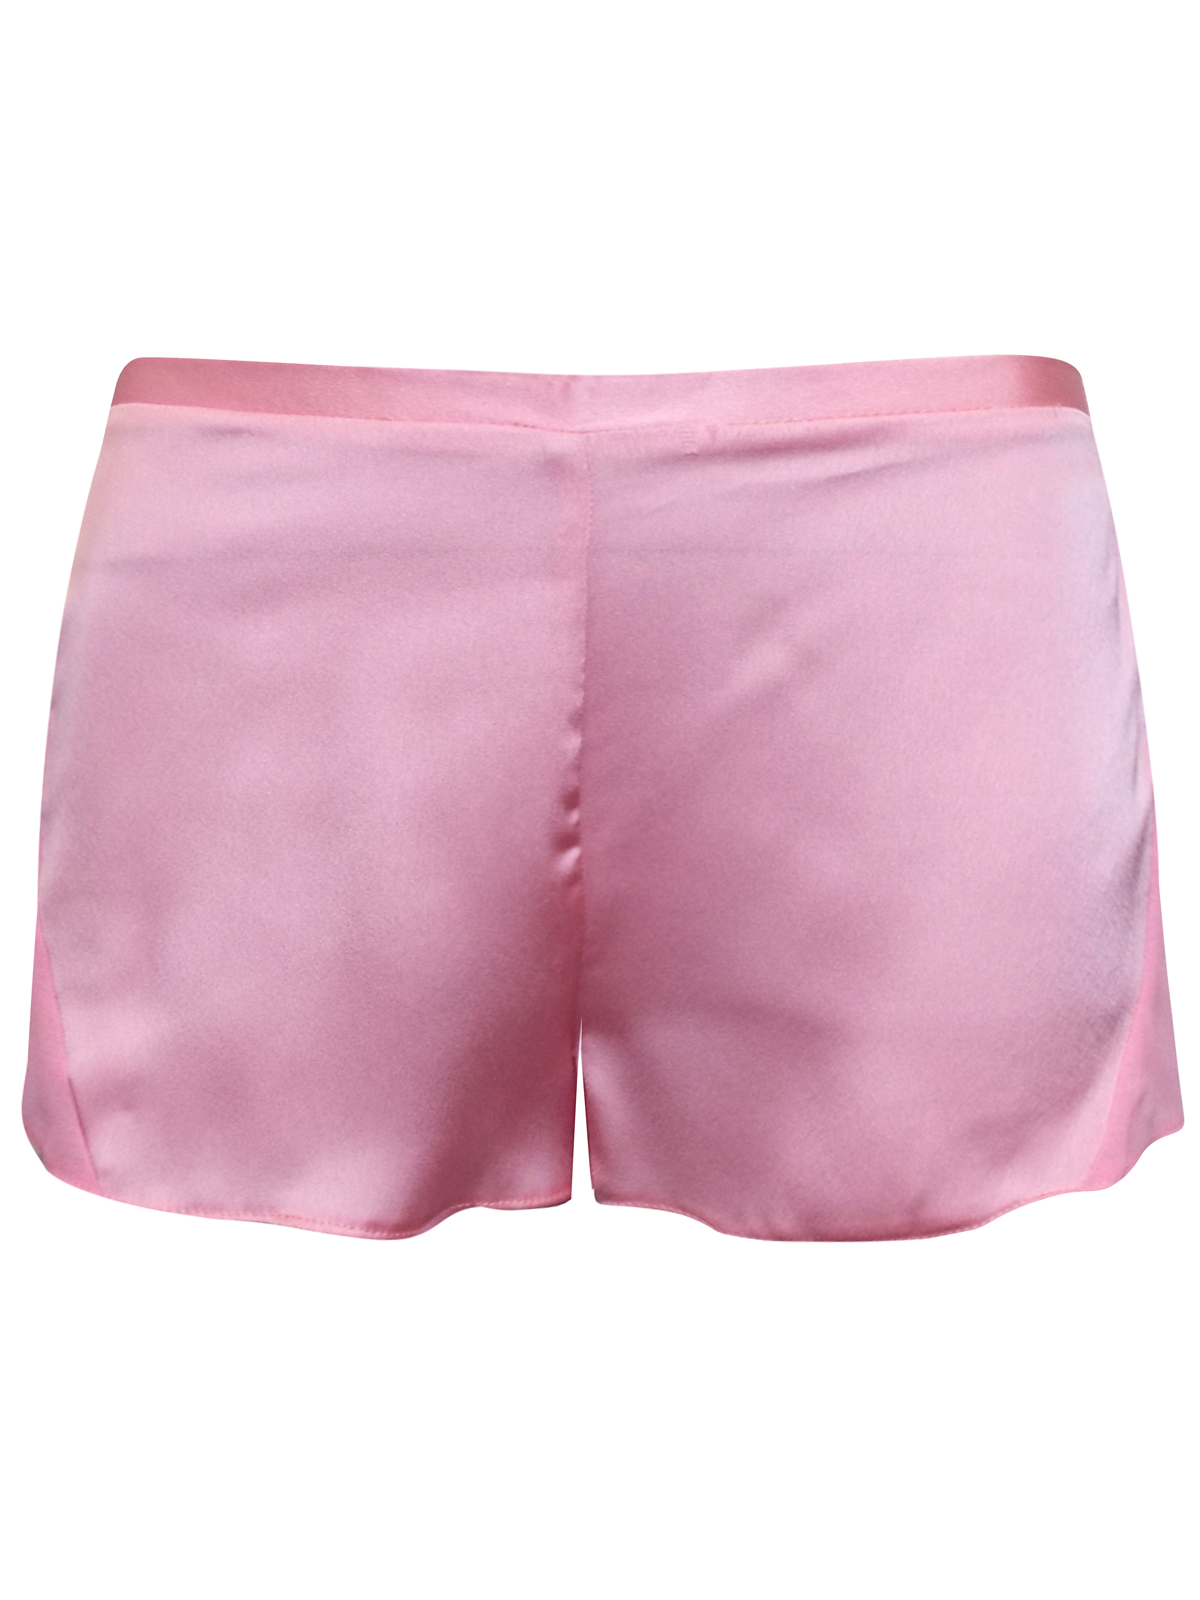 ASOS PINK Chiffon Panelled Satin Pyjama Shorts - Size 4 to 18